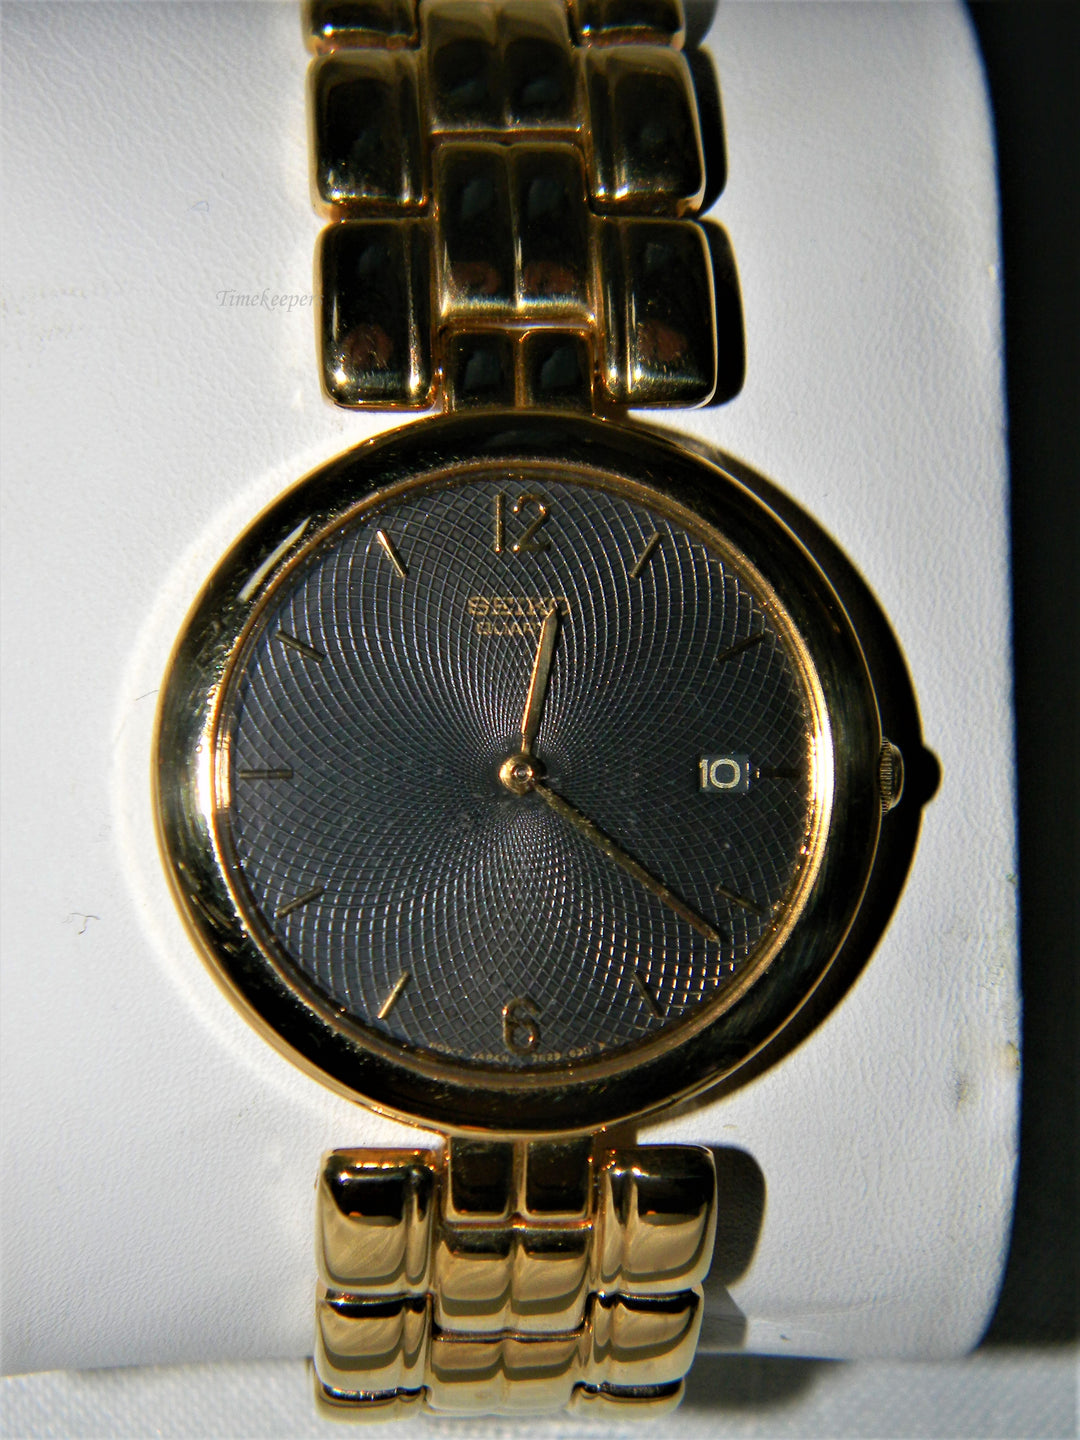 j575 Retro Seiko Quartz Black Dial Wrist Watch Bracelet Band in Gold Tone